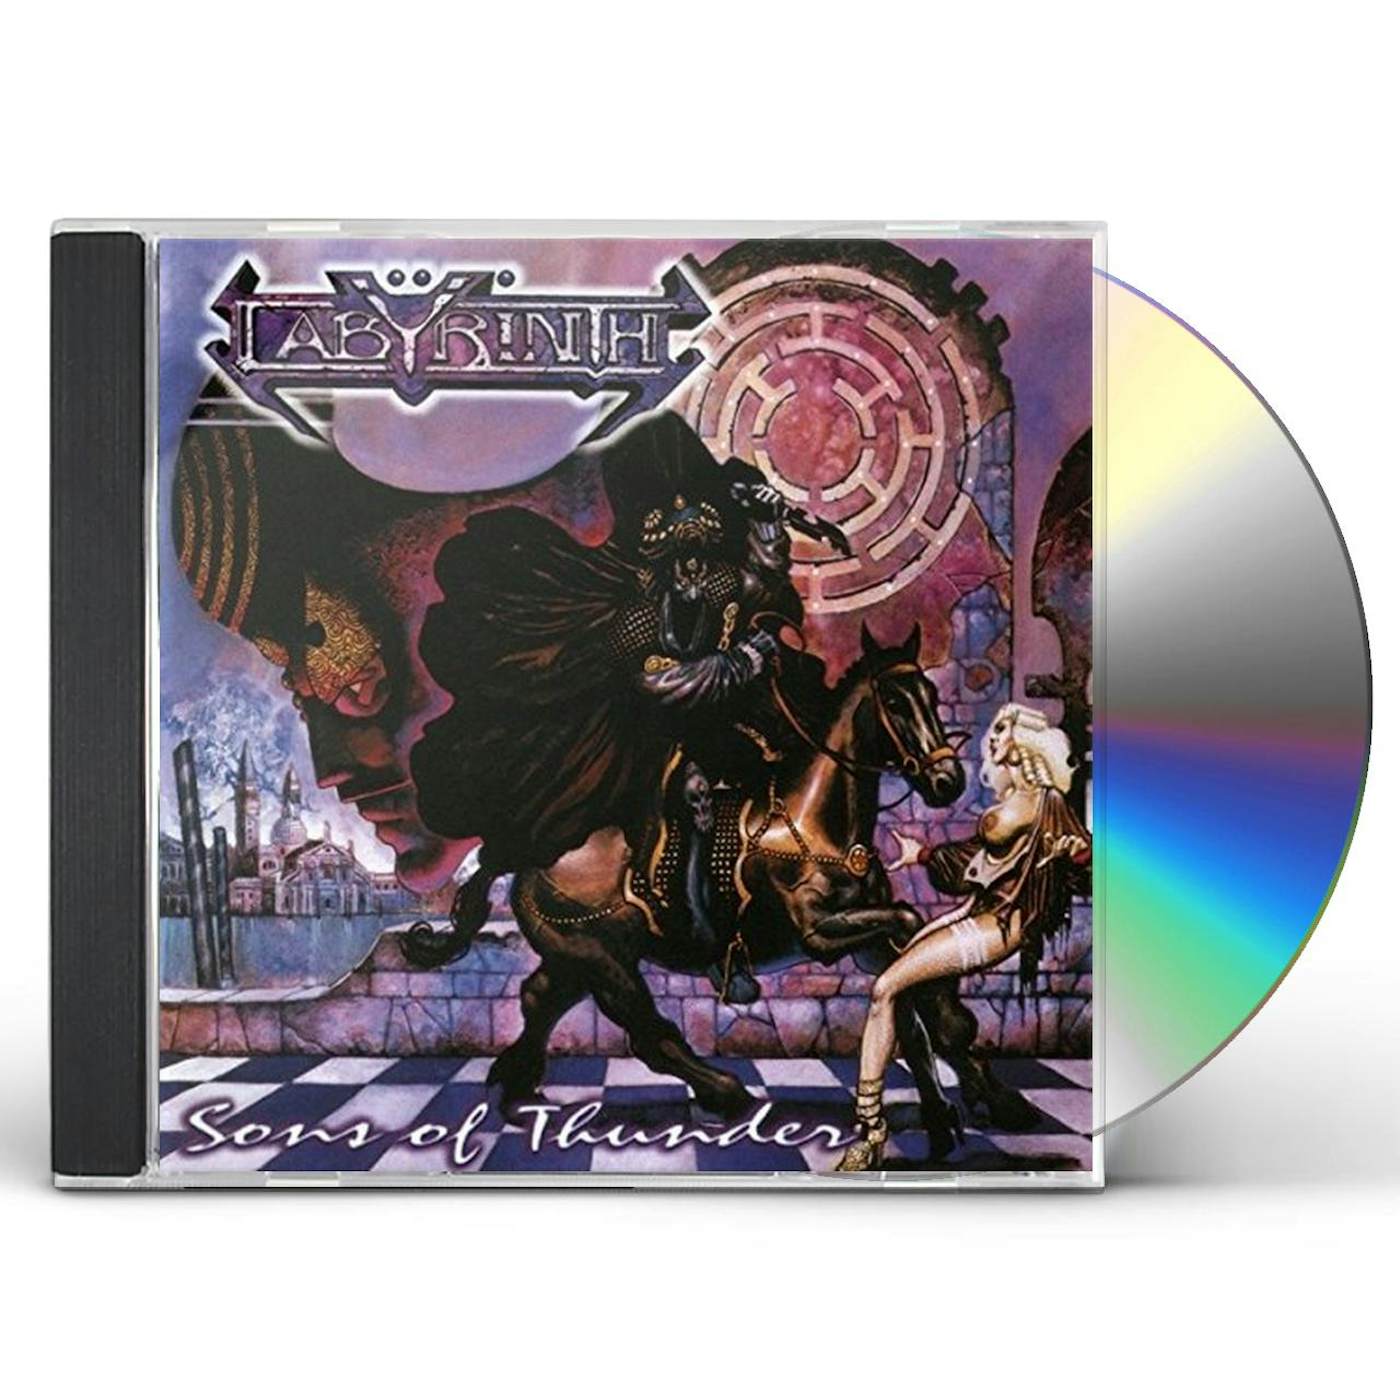 Labyrinth SONS OF THUNDER CD